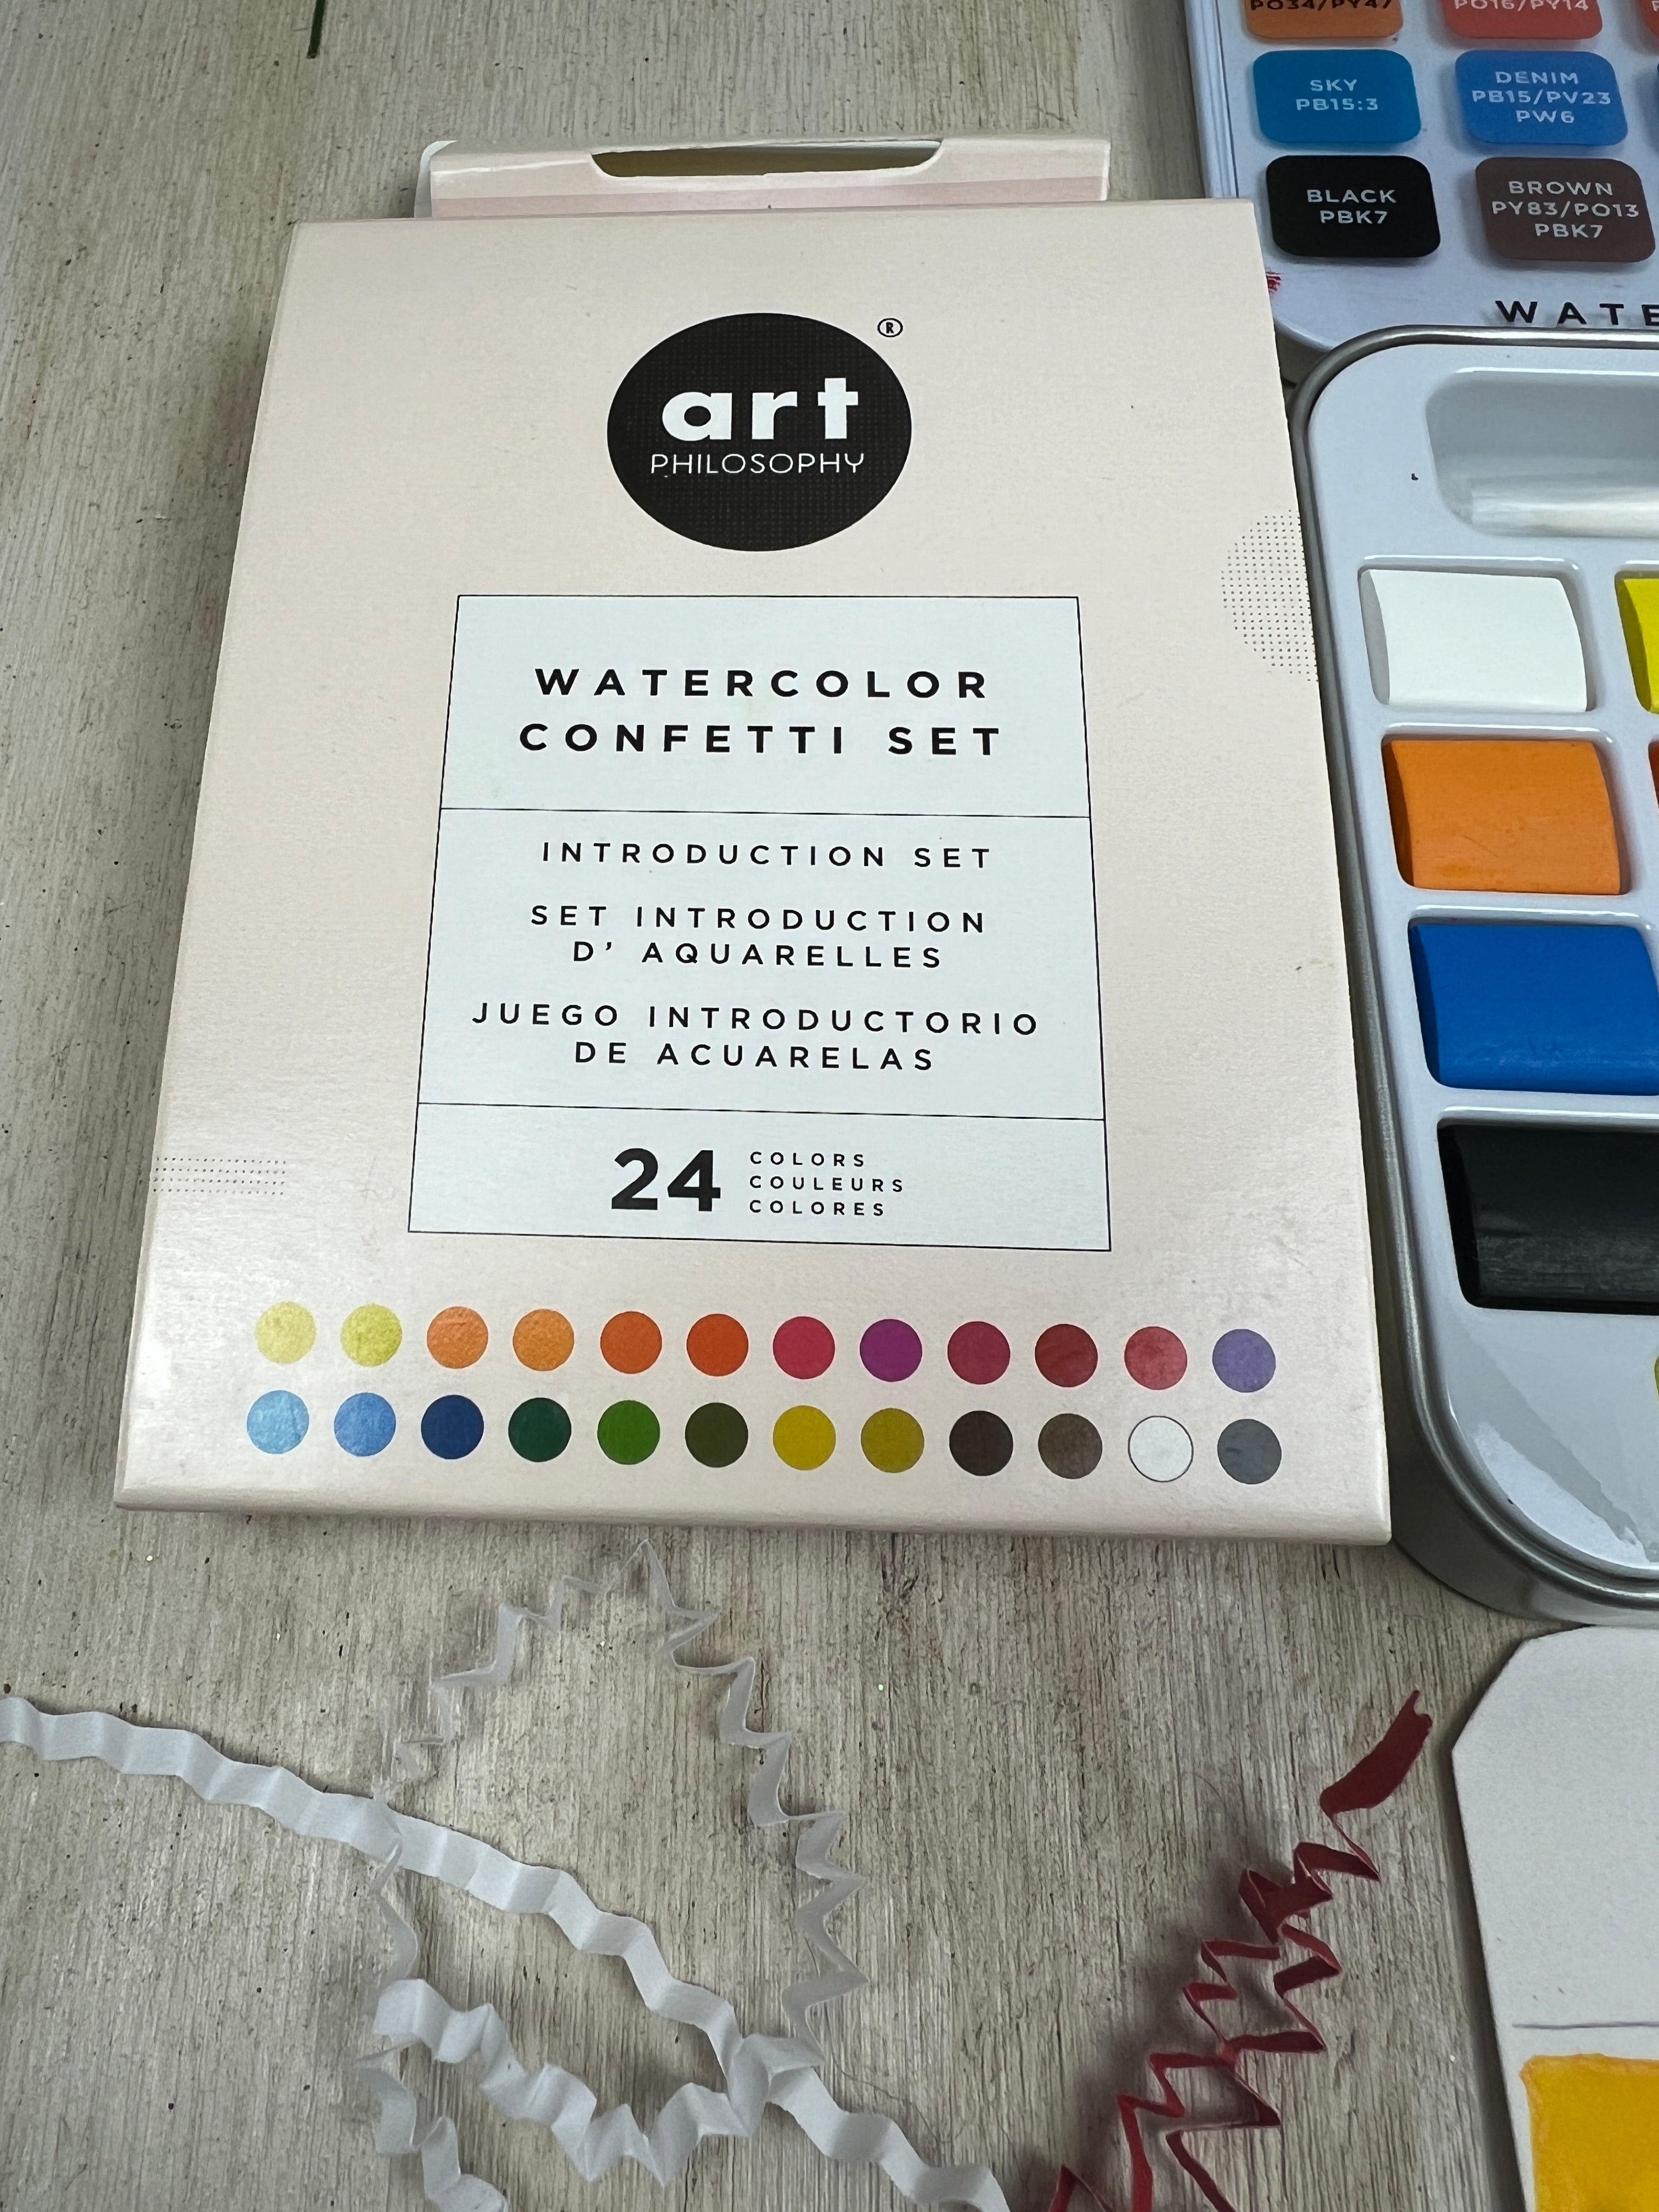 Watercolor Confetti Set by Art Philosophy